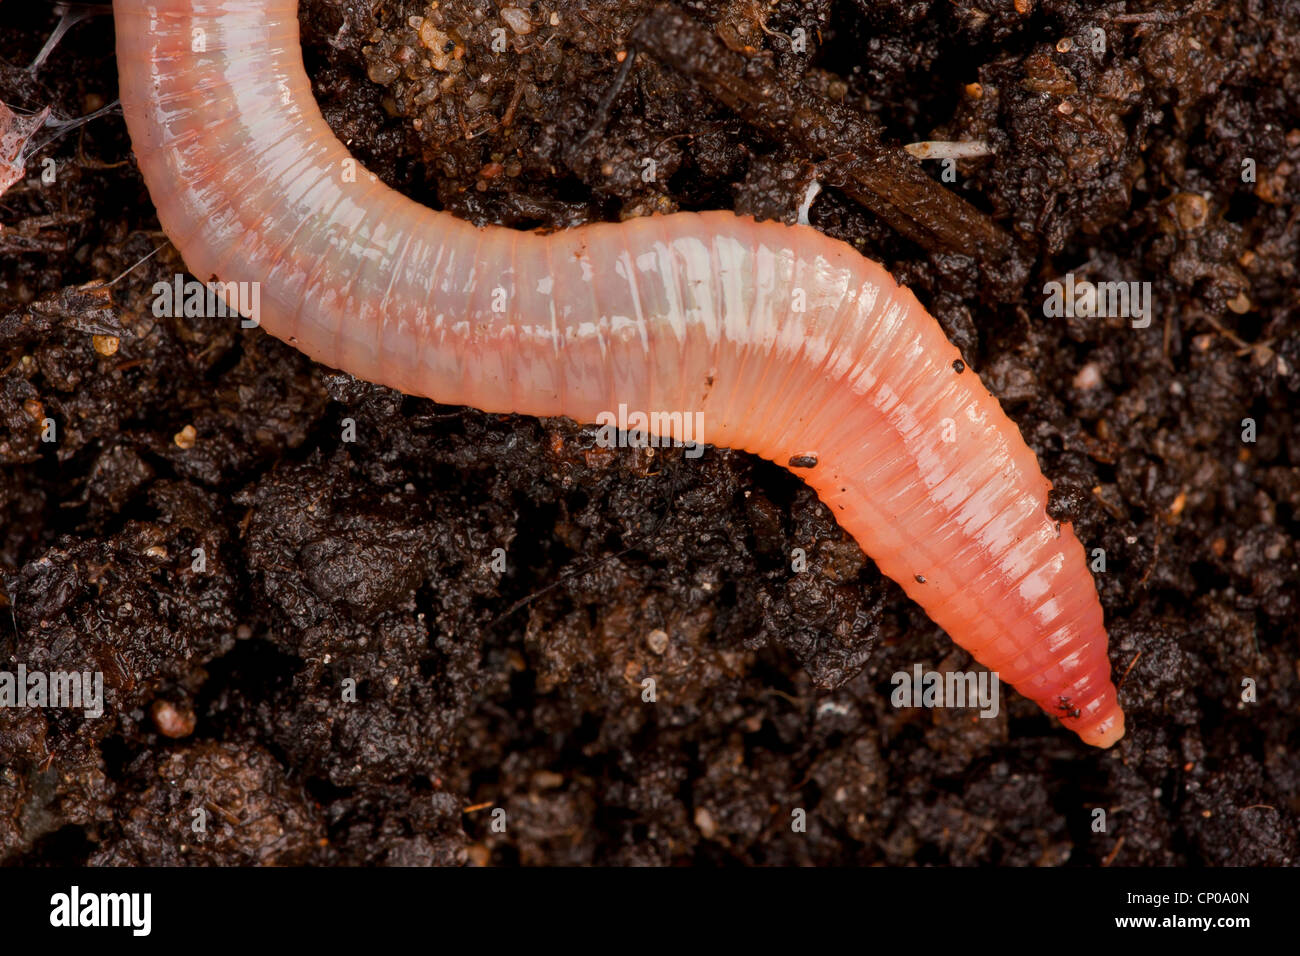 common earthworm, earthworm; lob worm, dew worm, squirreltail worm